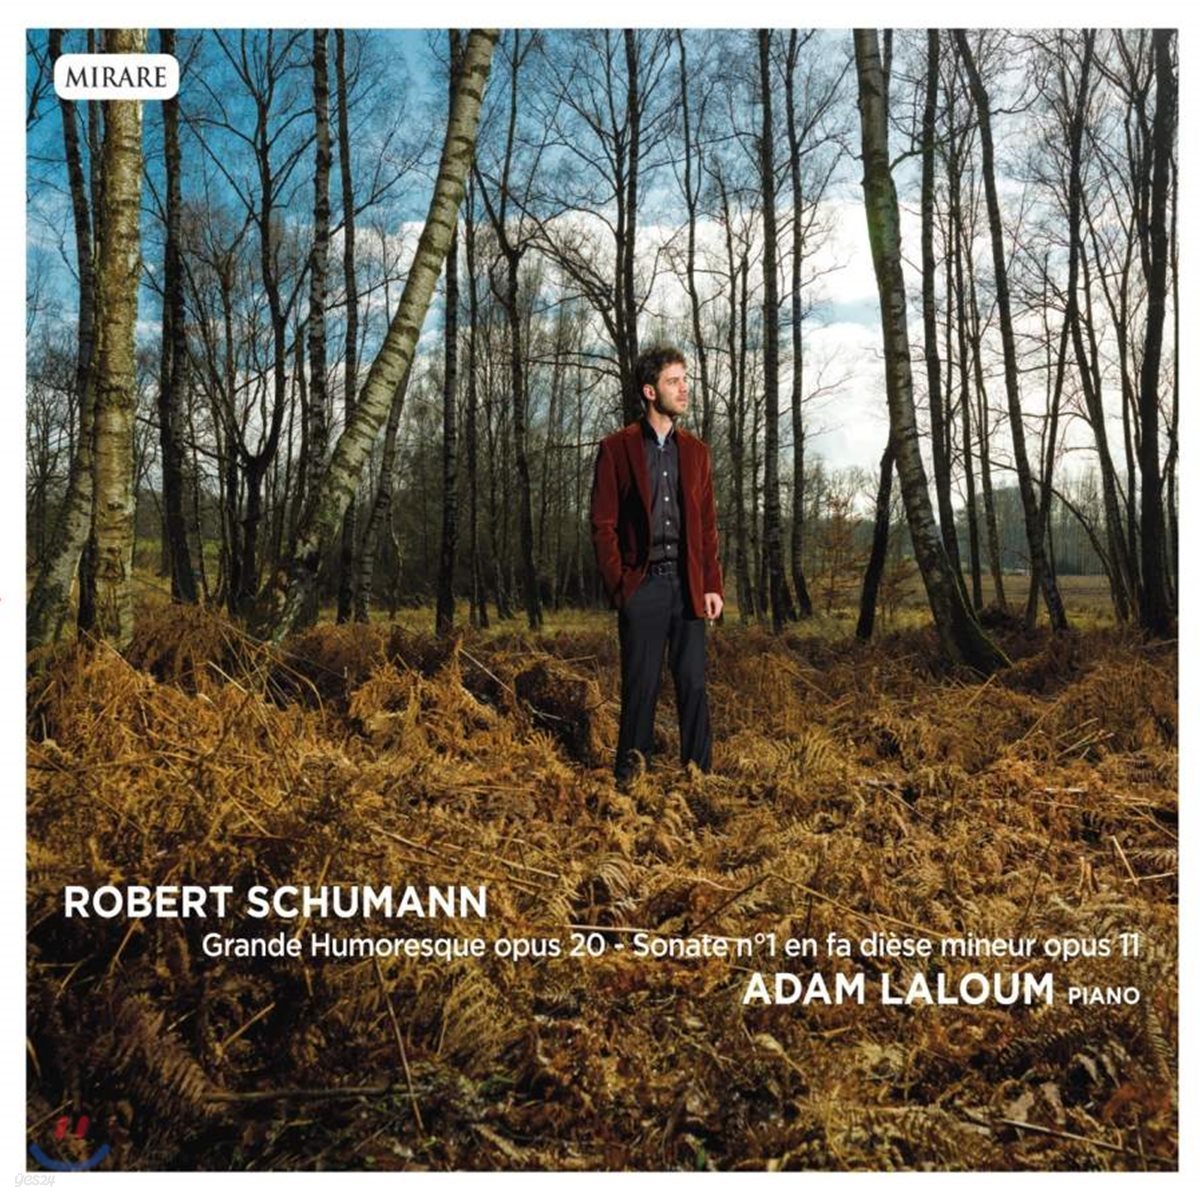 Adam Laloum 슈만: 유모레스크, 피아노 소나타 1번 - 아담 랄룸 (Schumann: Grande Humoresque, Piano Sonata No. 1)